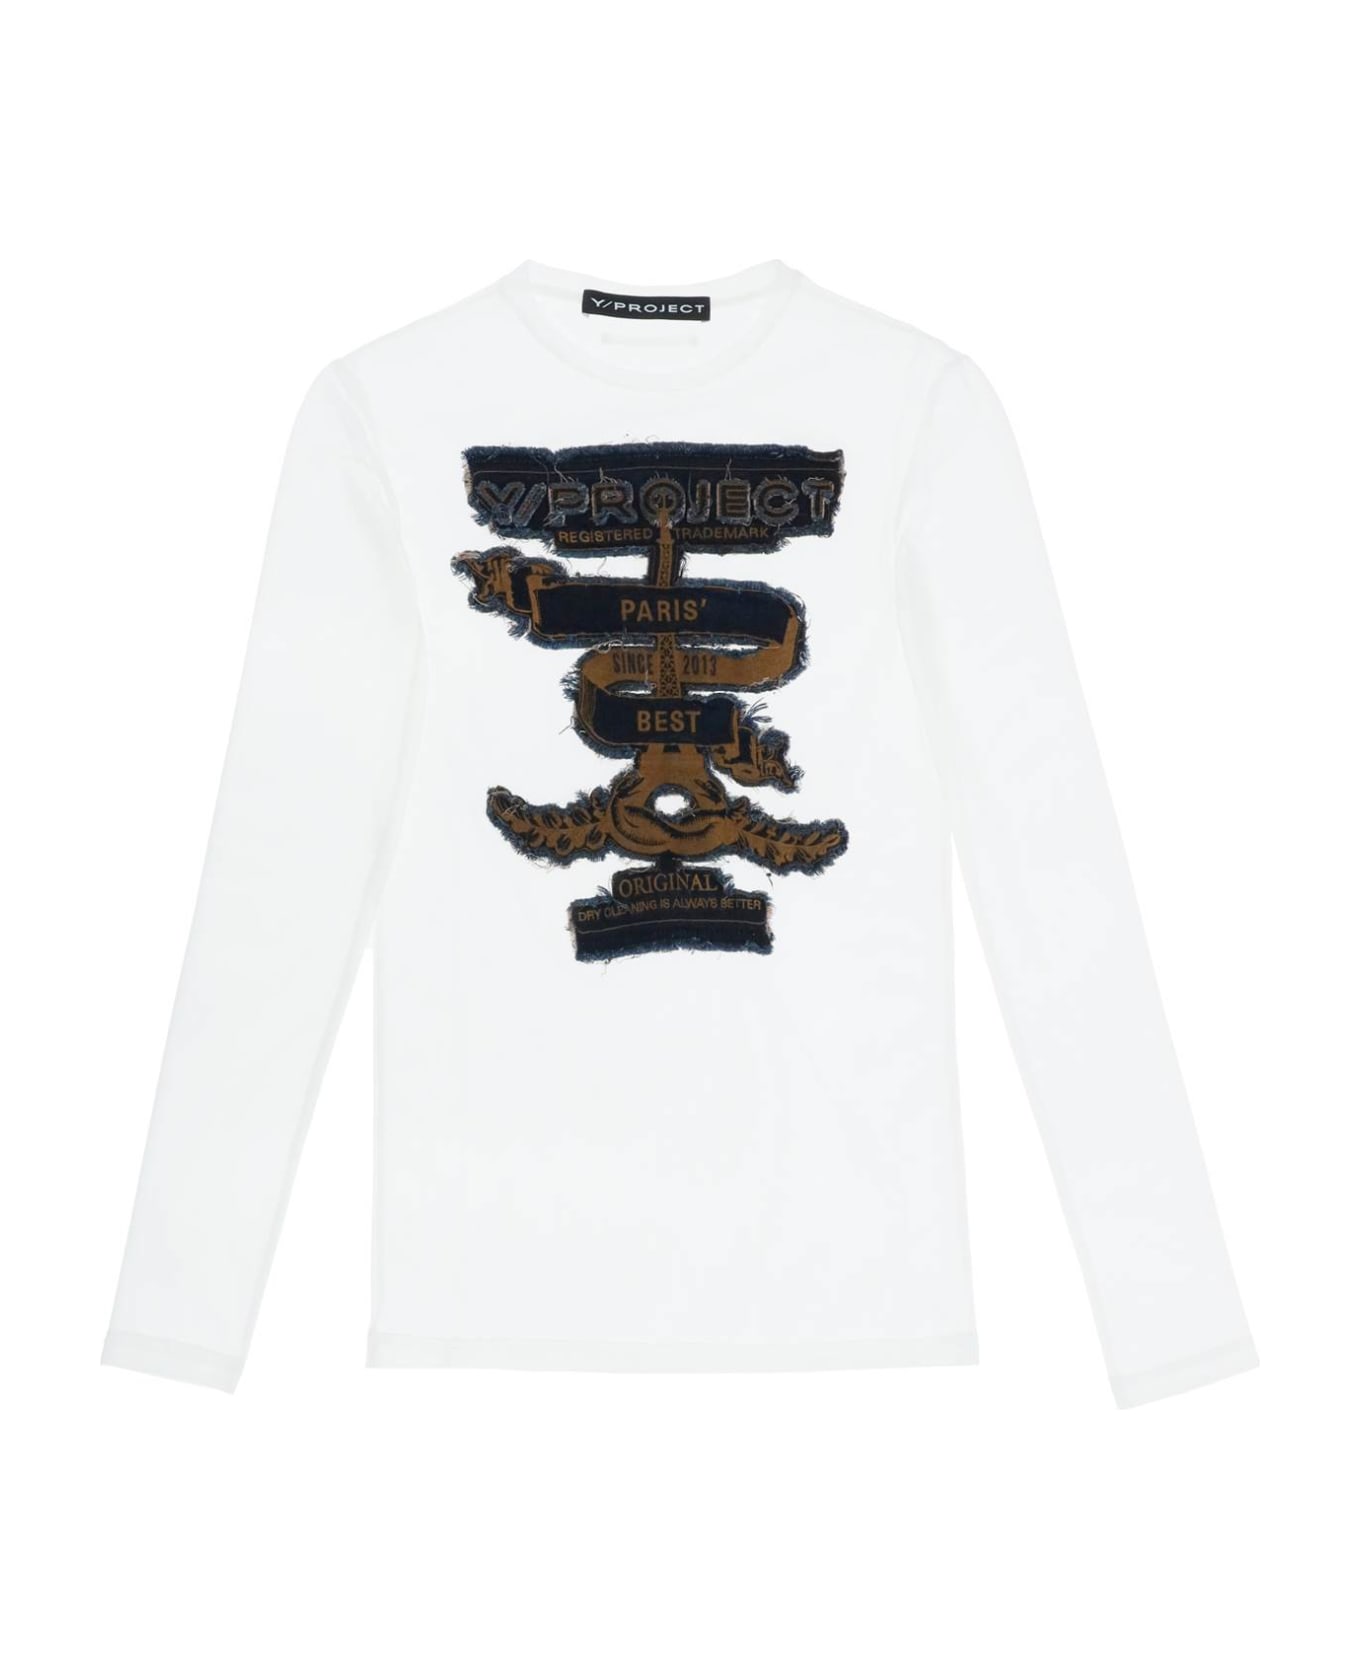 Y/Project Paris' Best Long Sleeve Mesh T-shirt - WHITE (White) シャツ